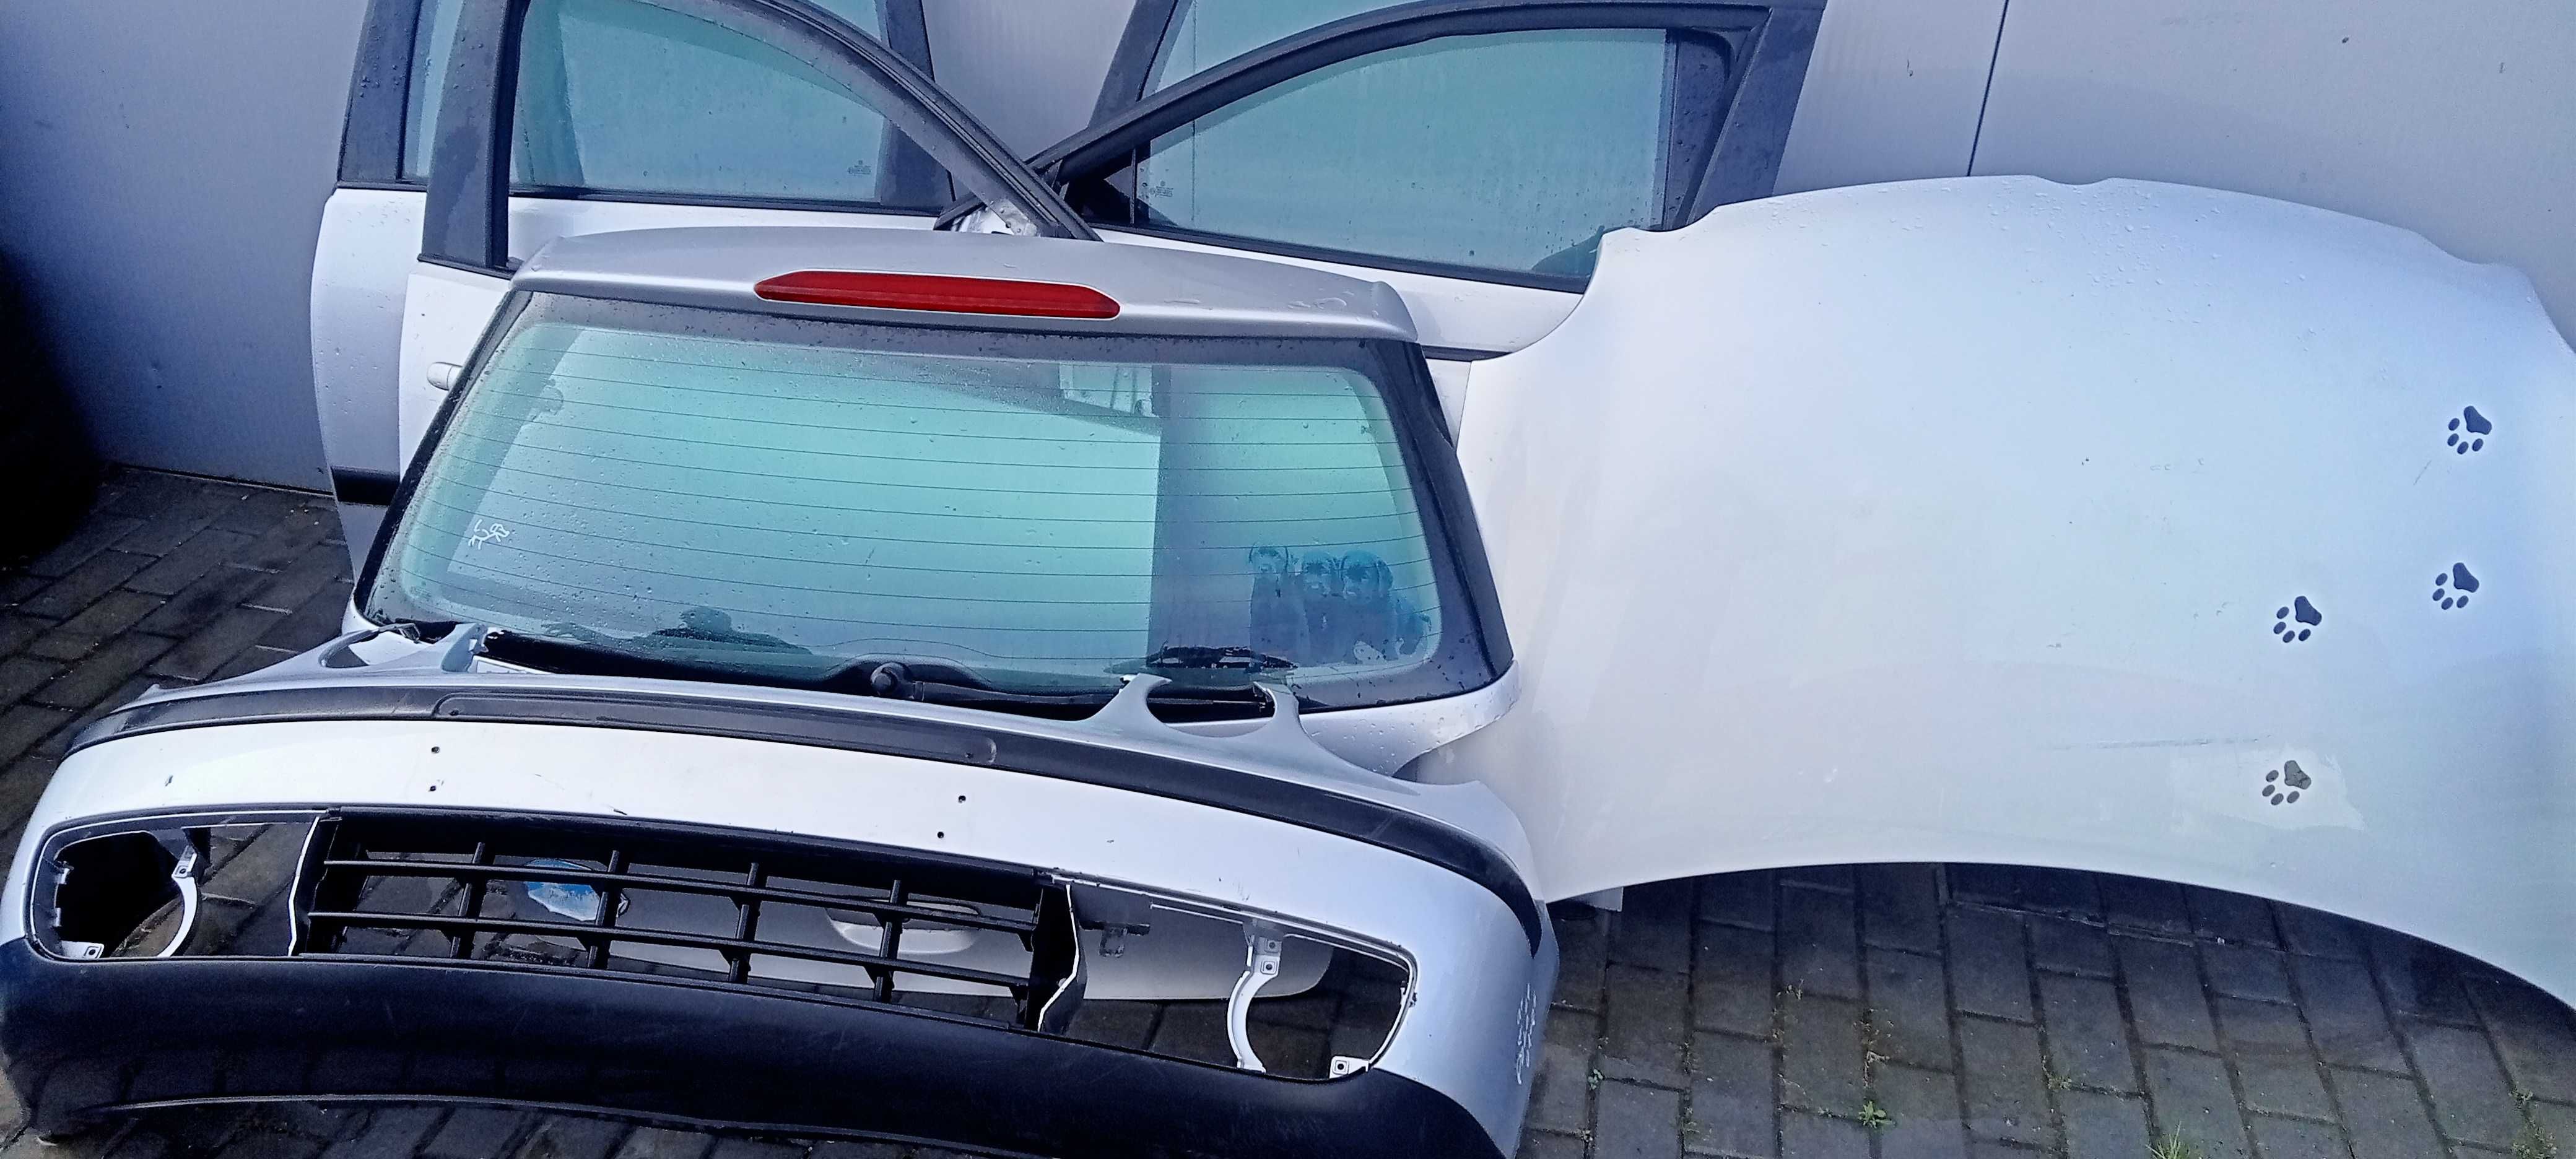 Capot Mala Para Choques Portas VW Polo IV e Polo III